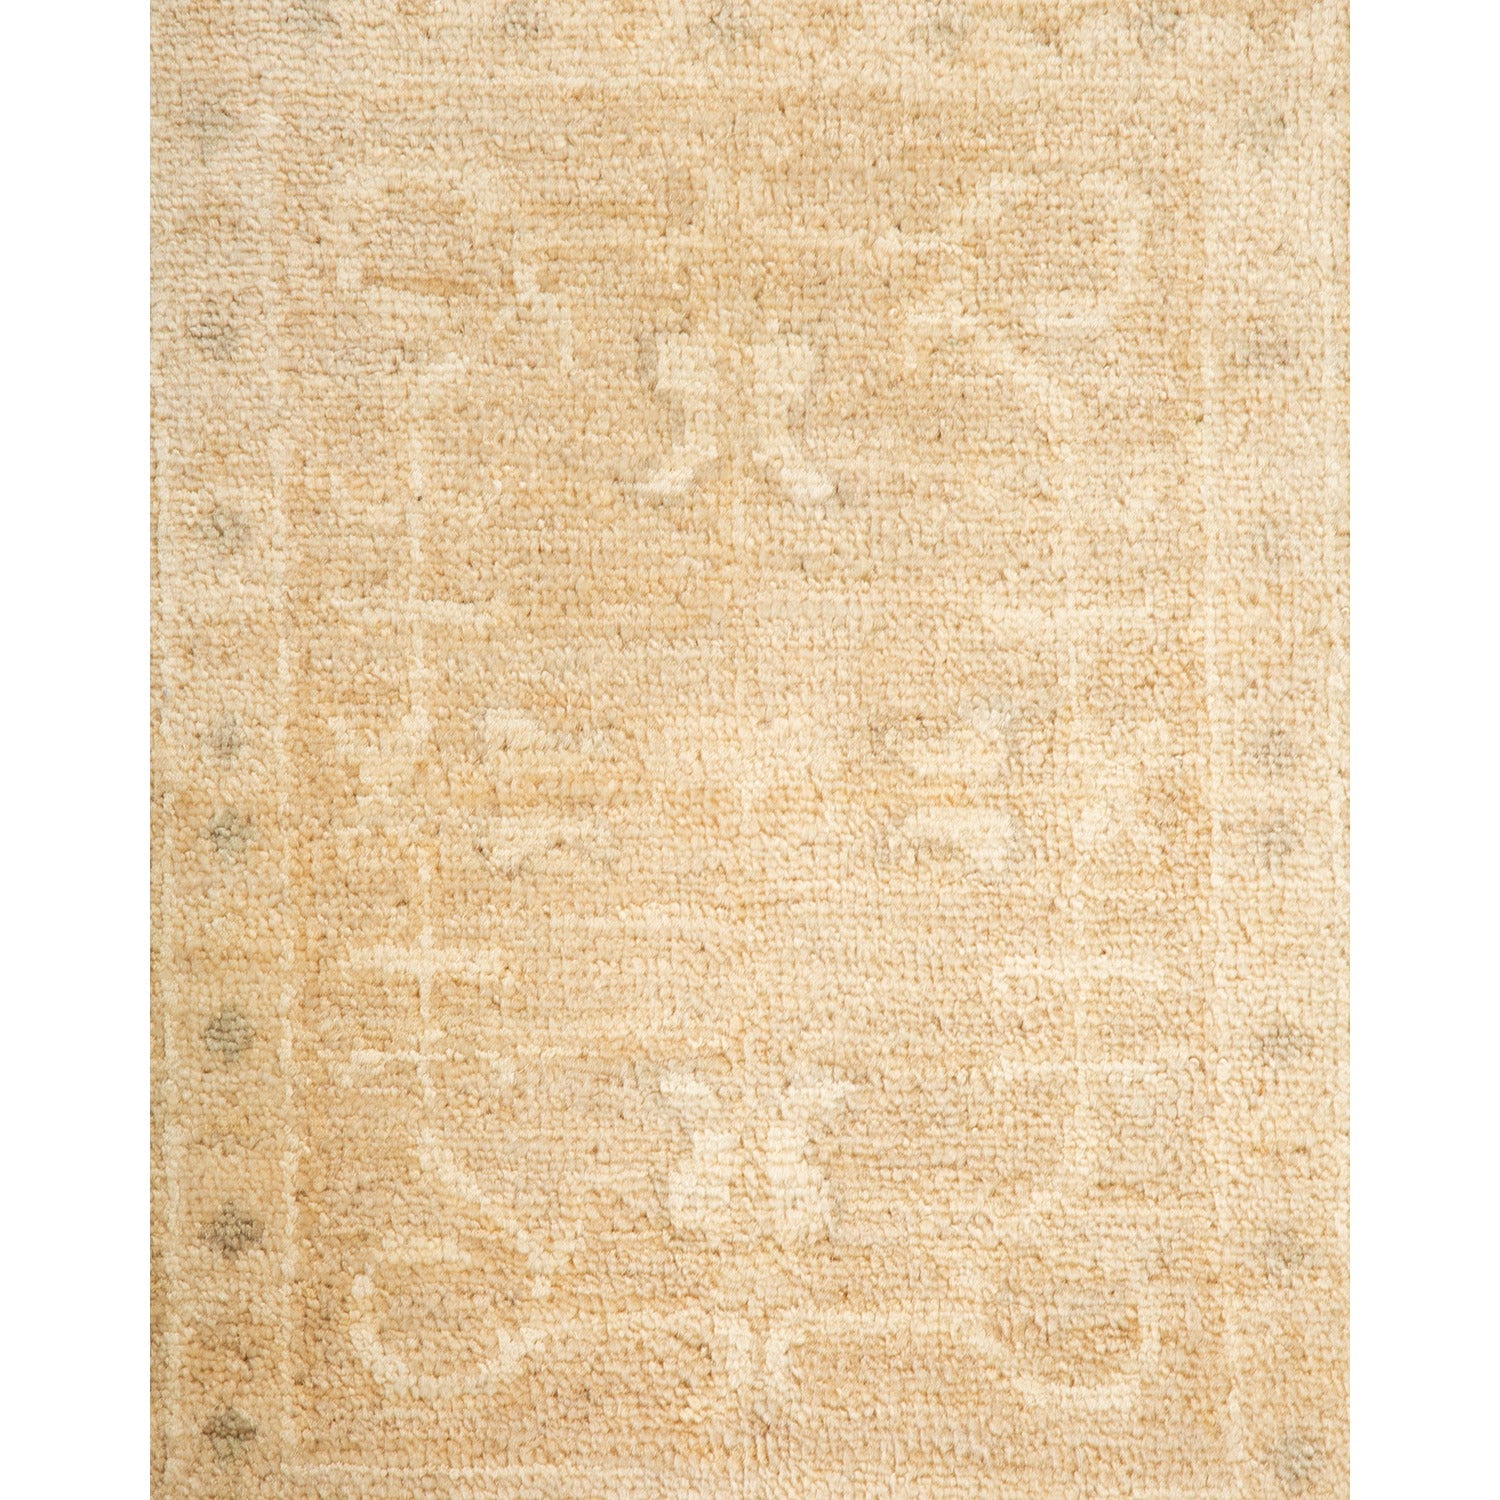 Faded vintage-style rug in neutral beige with subtle floral design